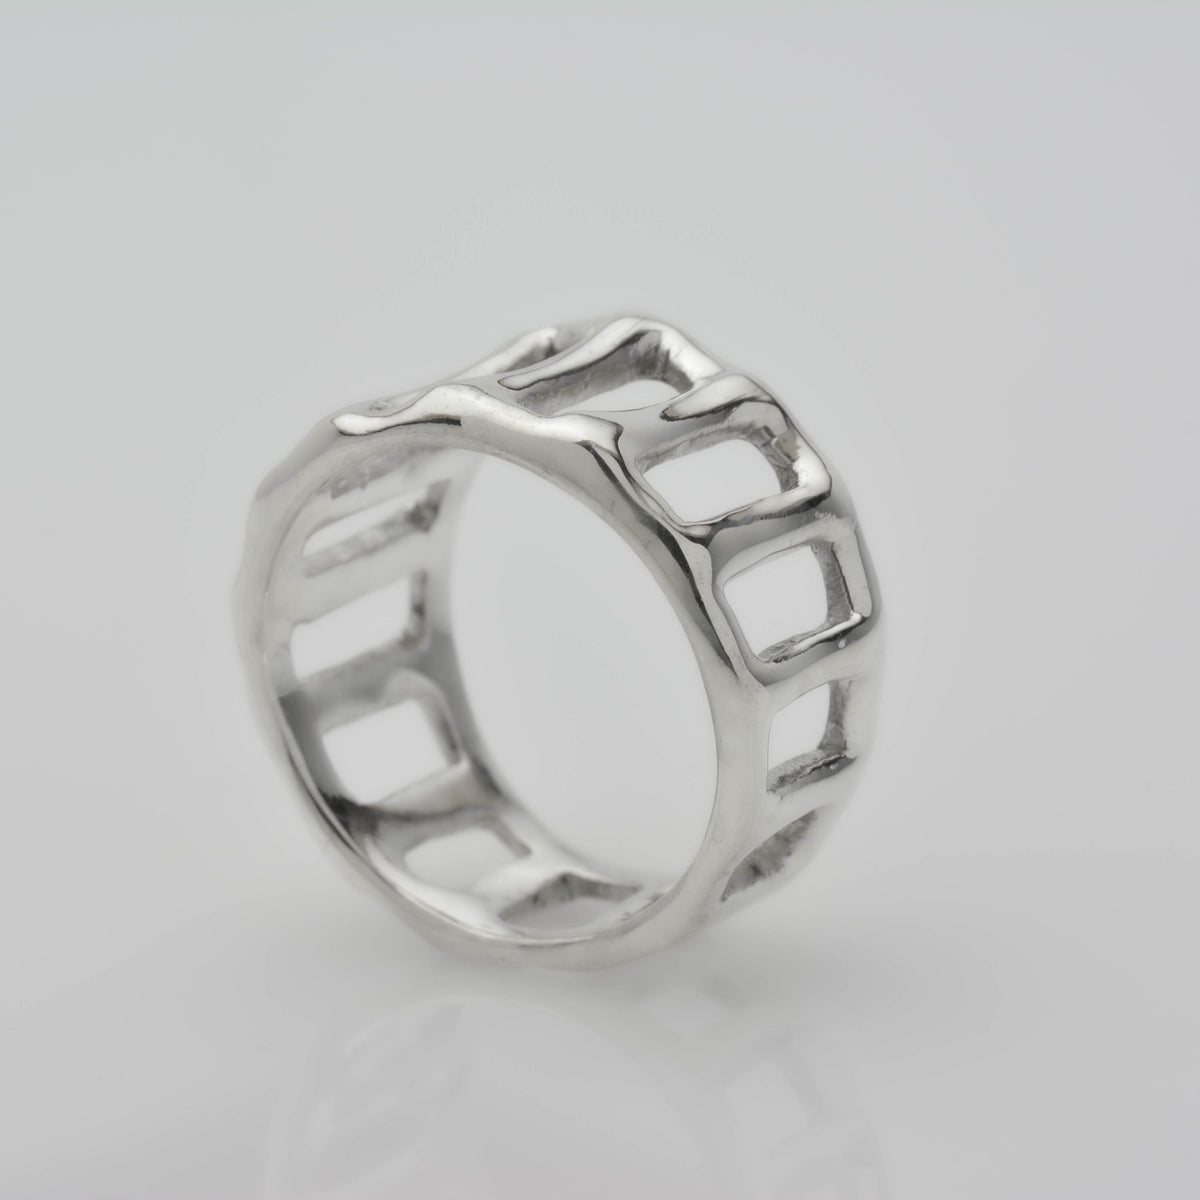 Bridges Ring: A Striking Sterling Silver Art Design that Enchants